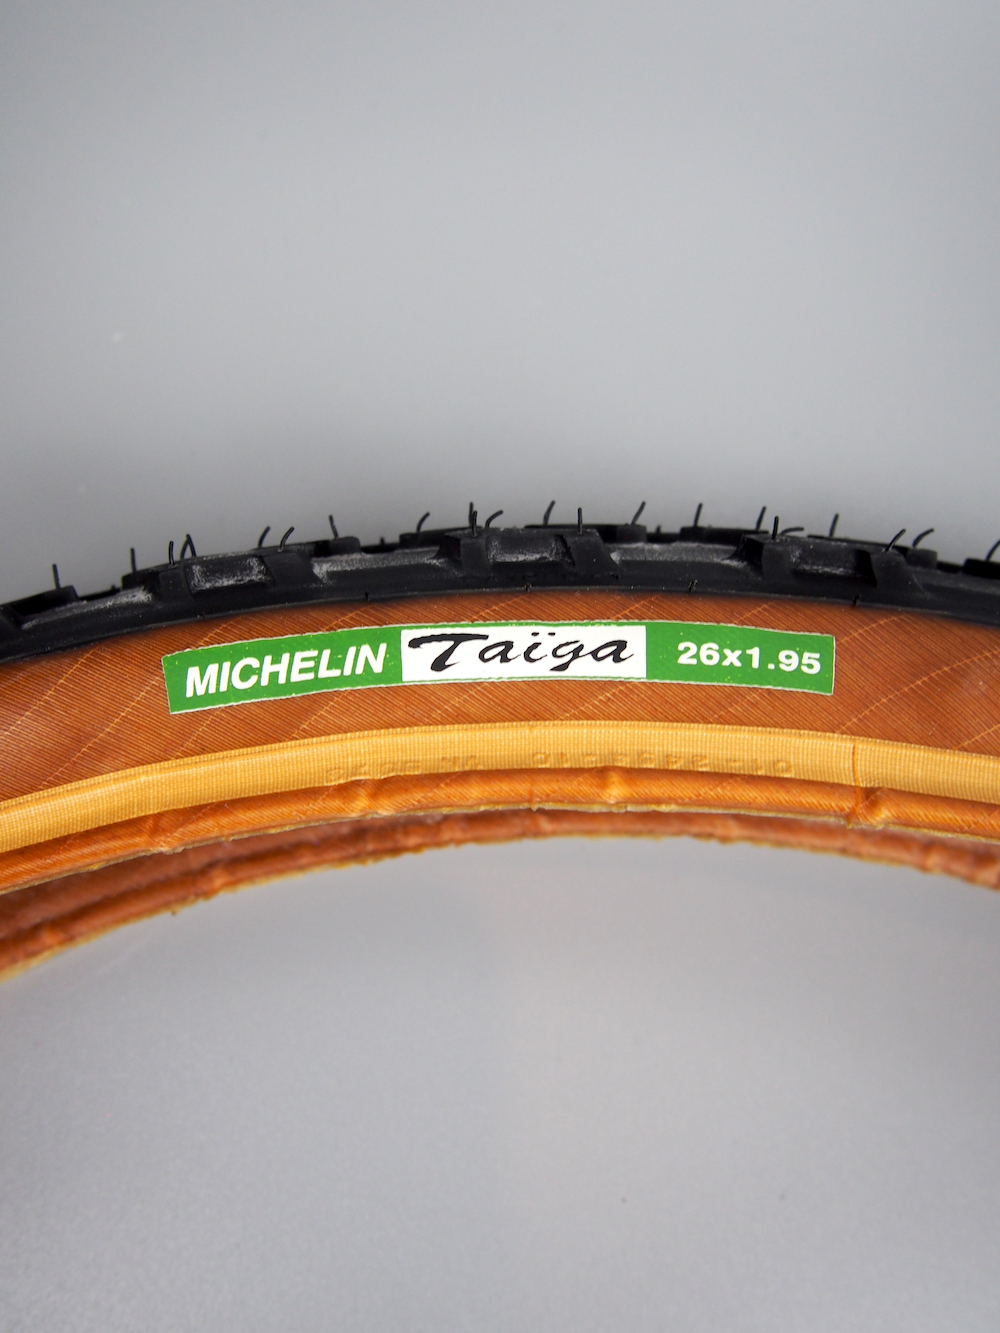 Michelin Taiga skinwall folding 26" MTB tyre